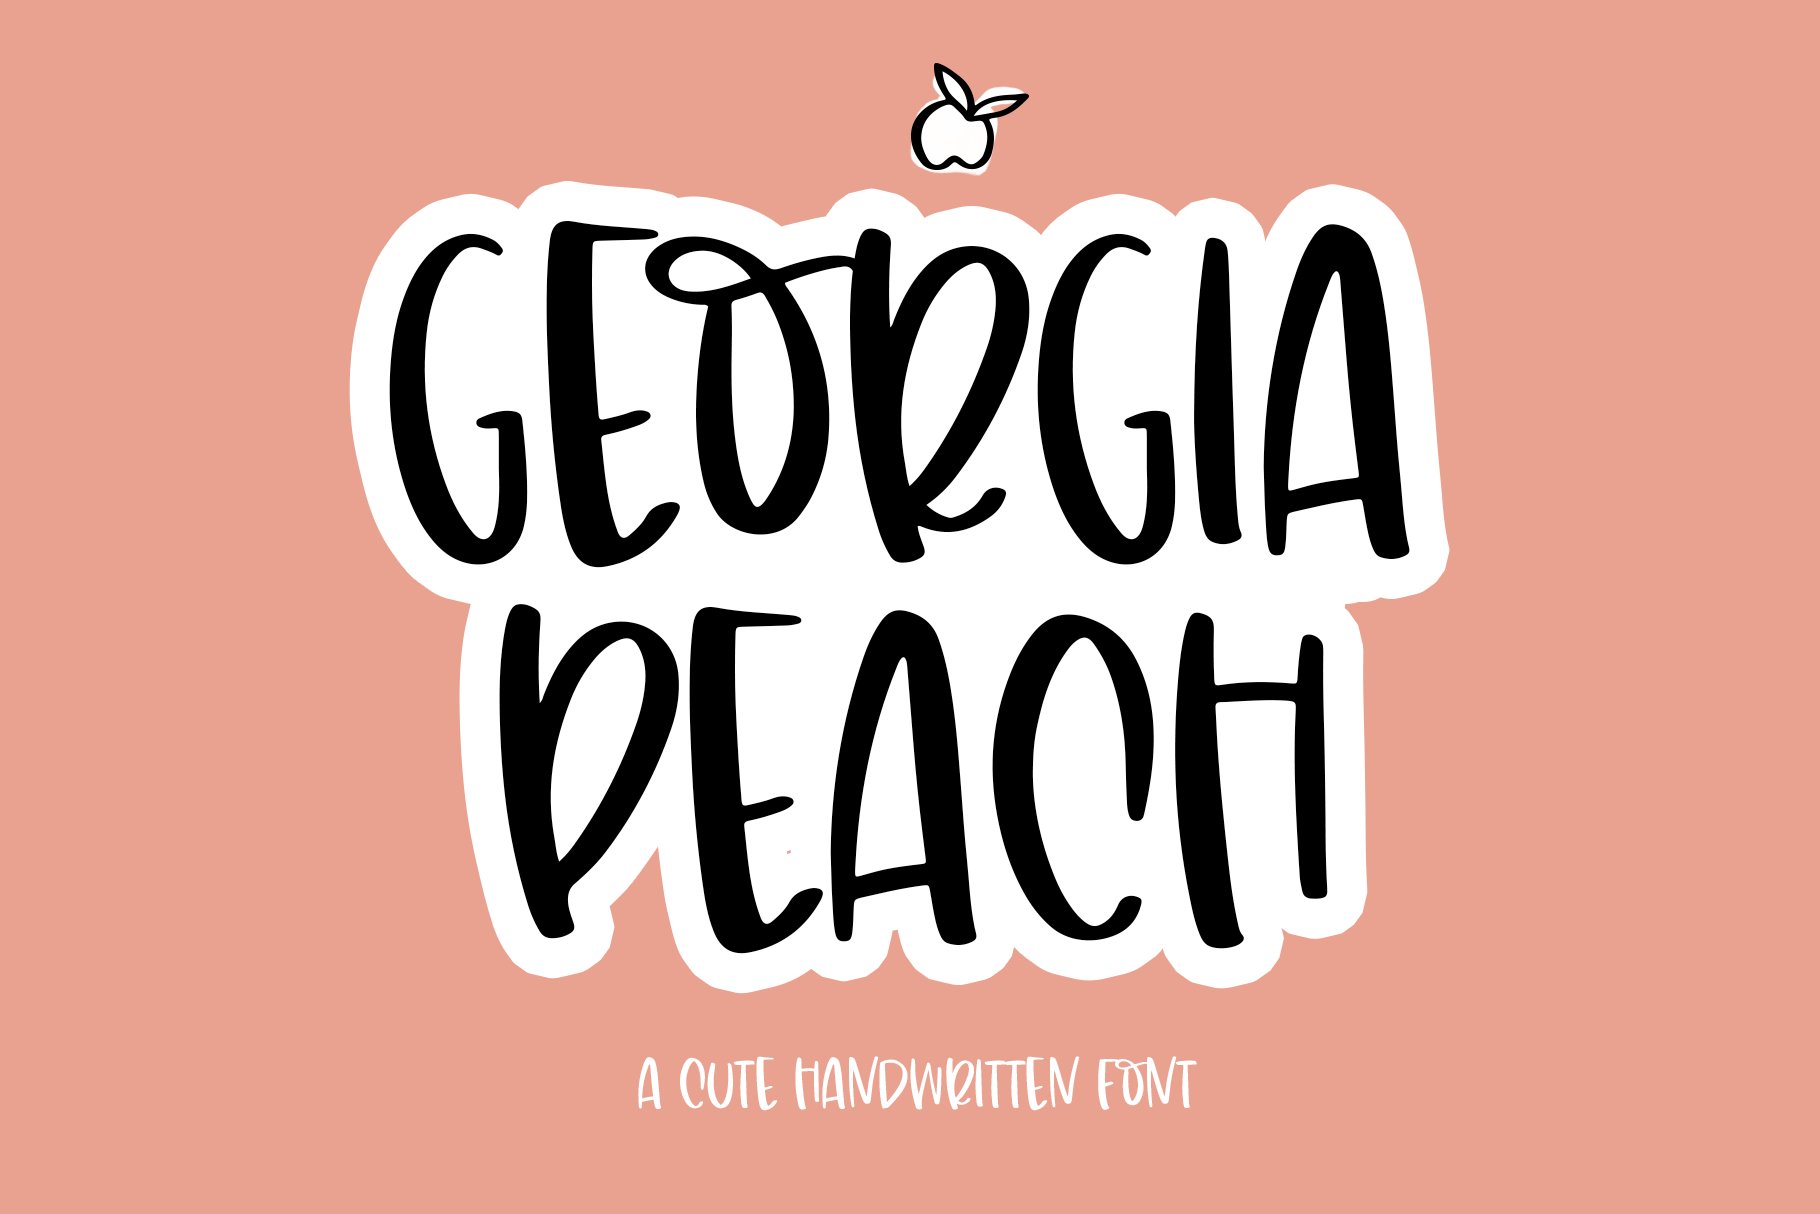 Georgia Peach - Handwritten Font cover image.